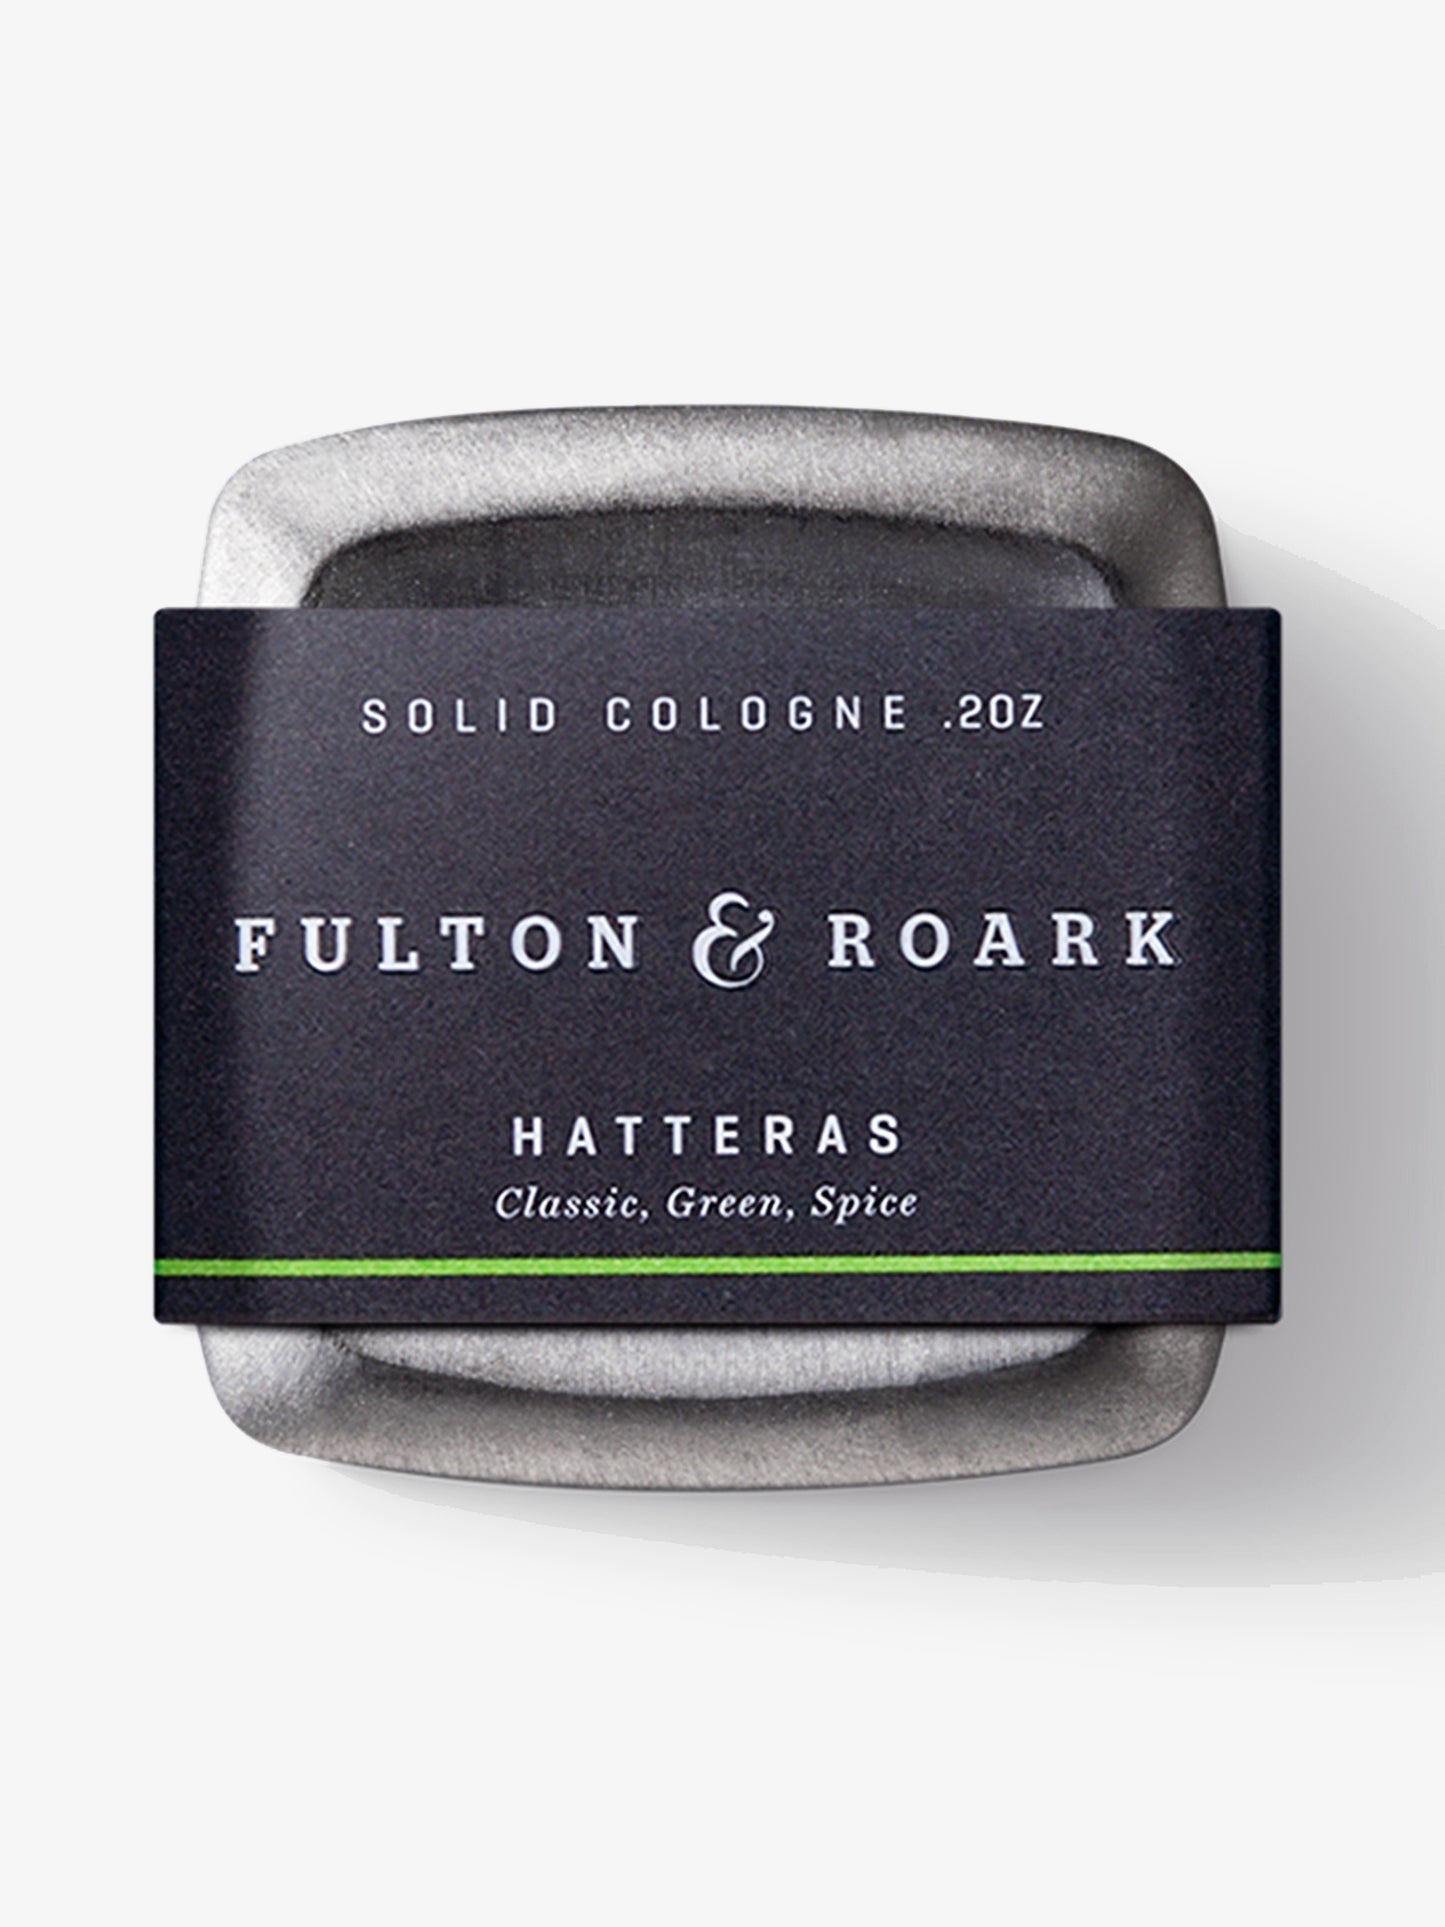 Fulton and Roark Hatteras Cologne